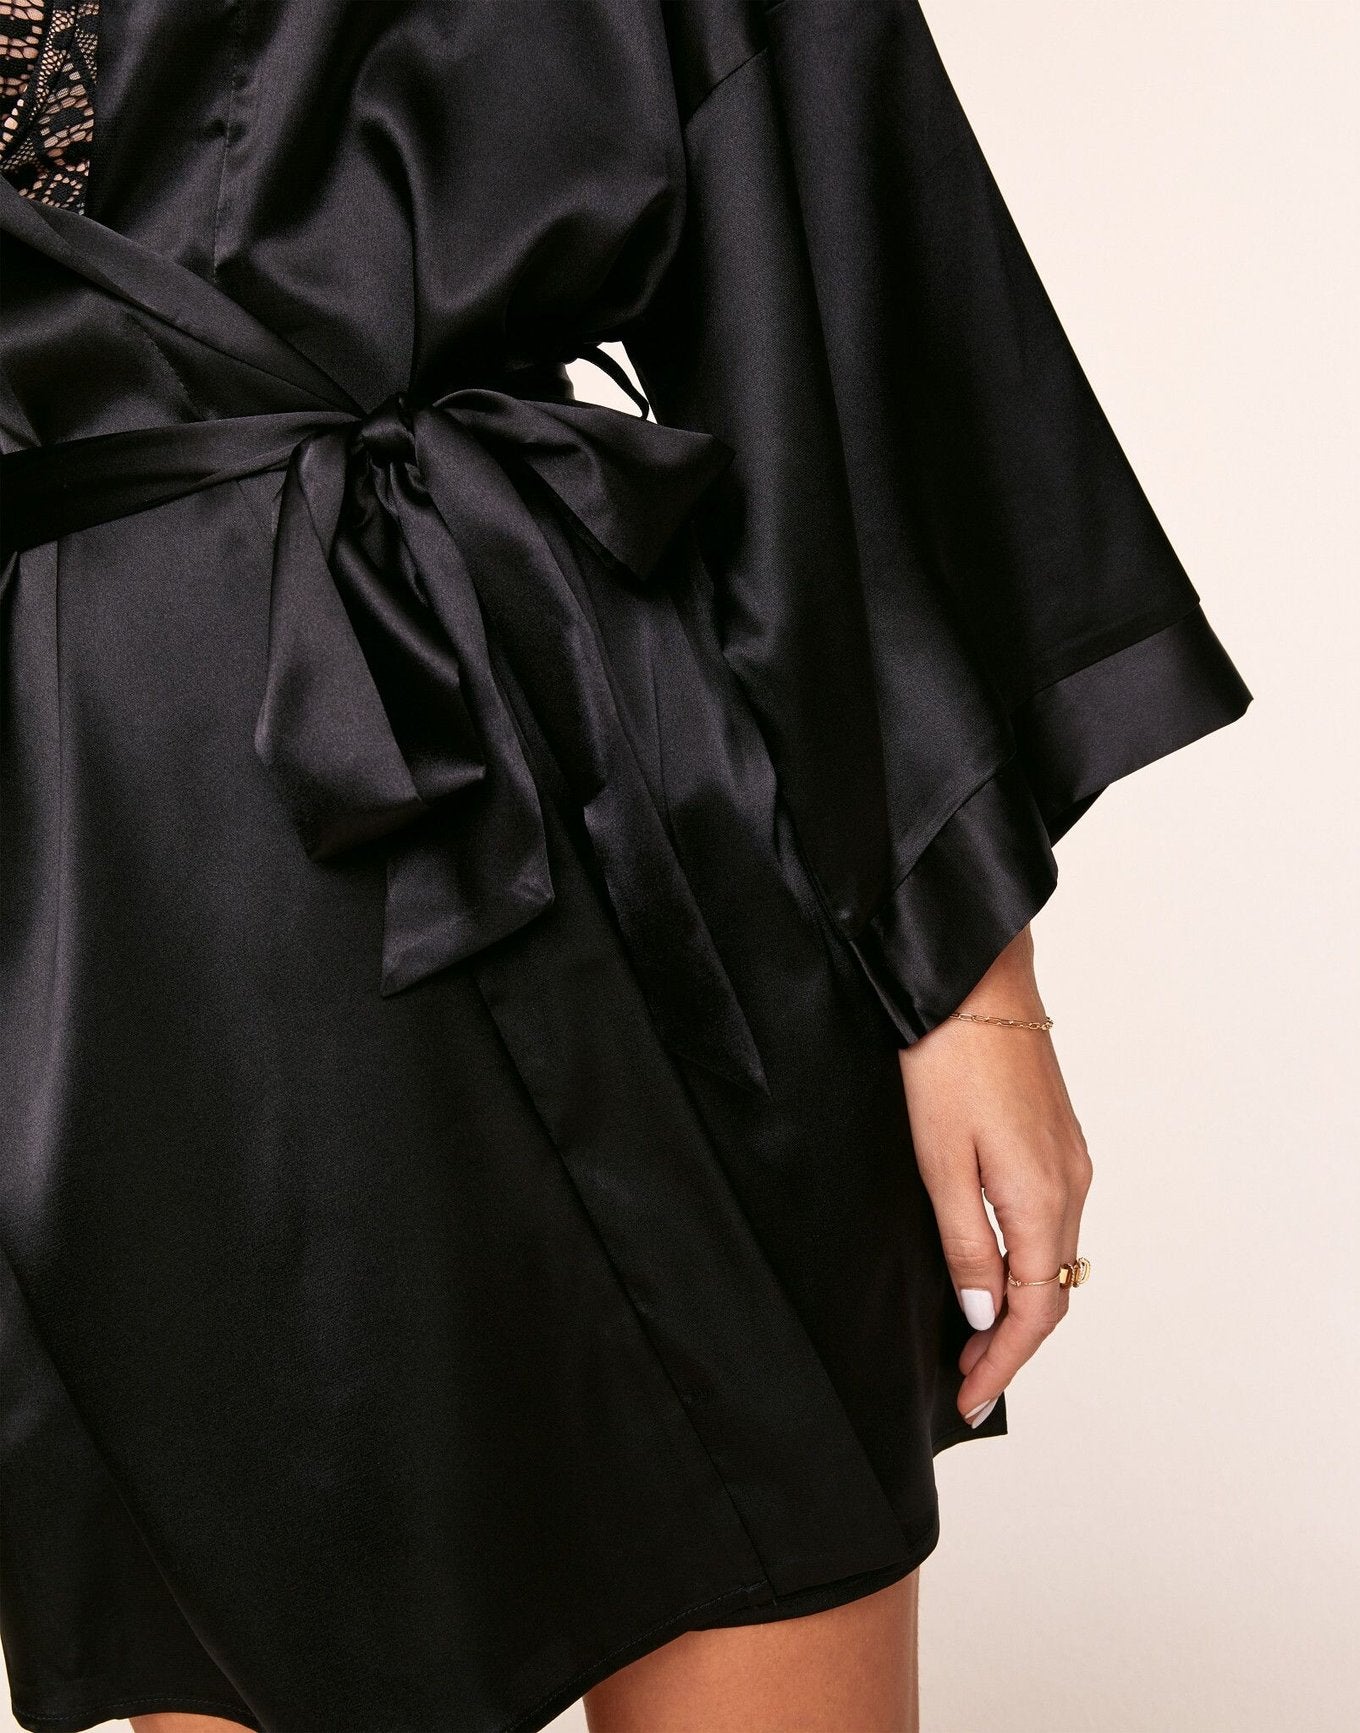 Adore Me Romina Kimono Robe in color Jet Black and shape robe